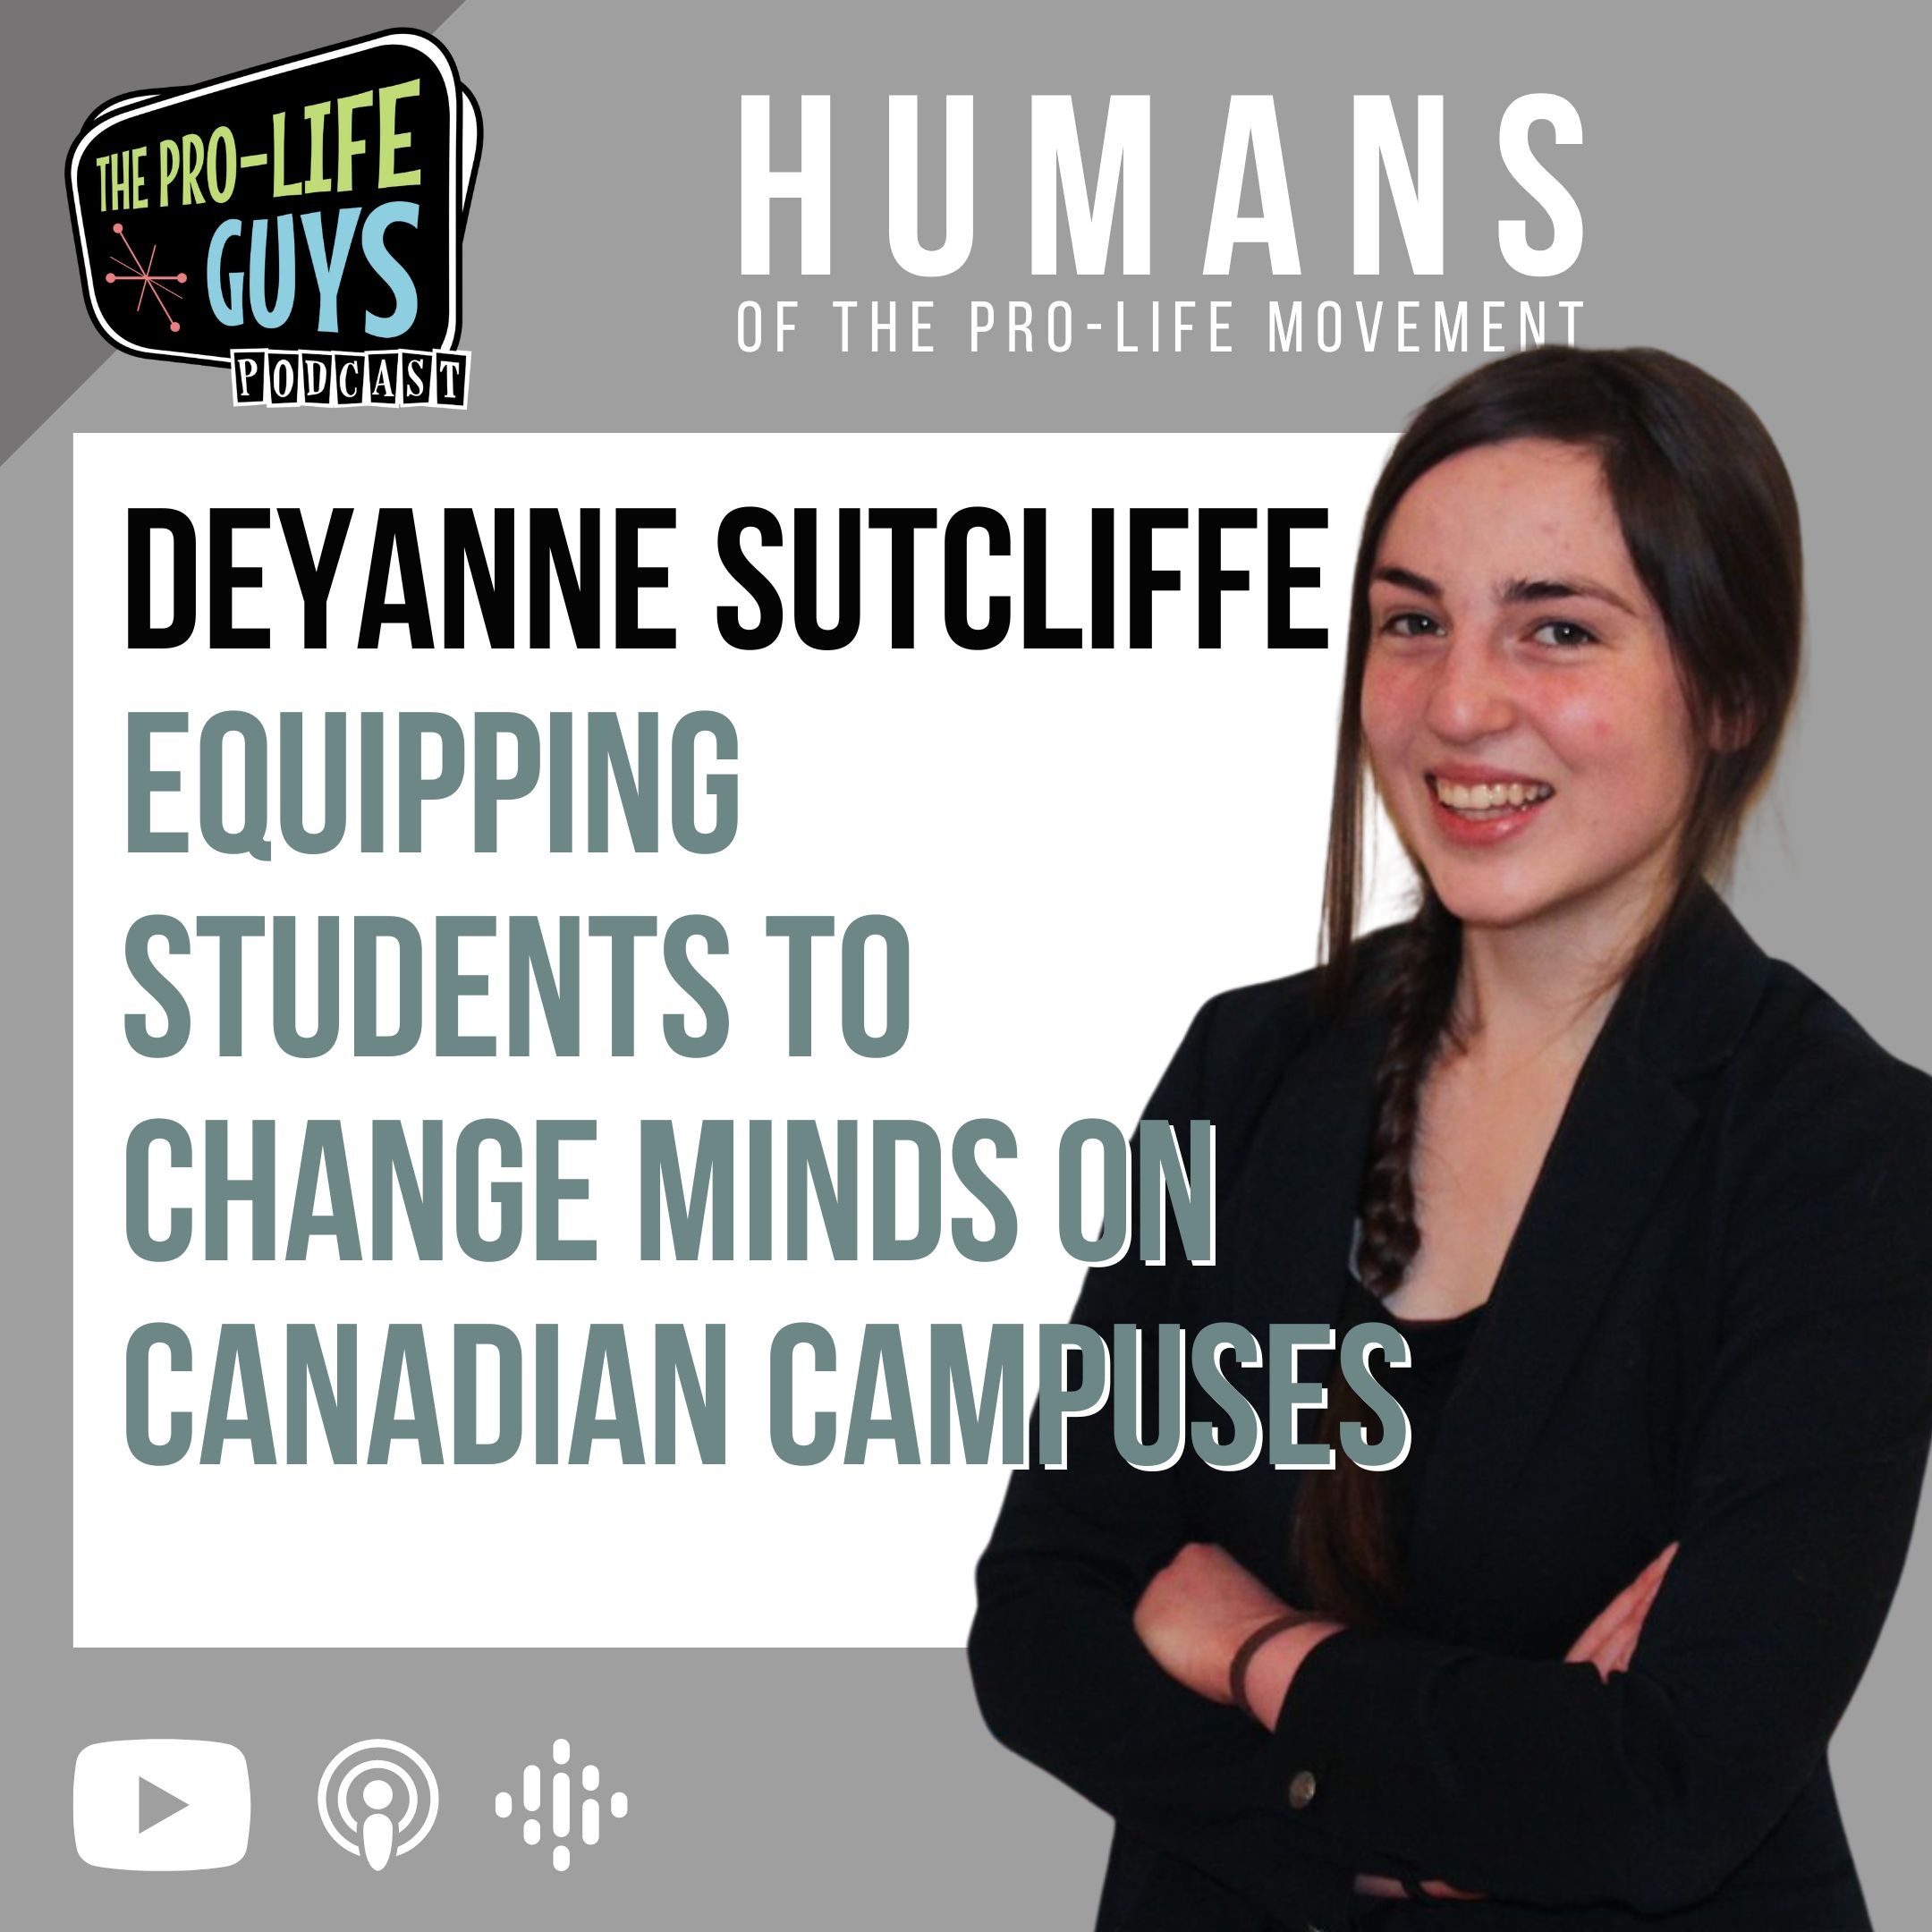 HPLM: Deyanne Sutcliffe from National Campus Life Network